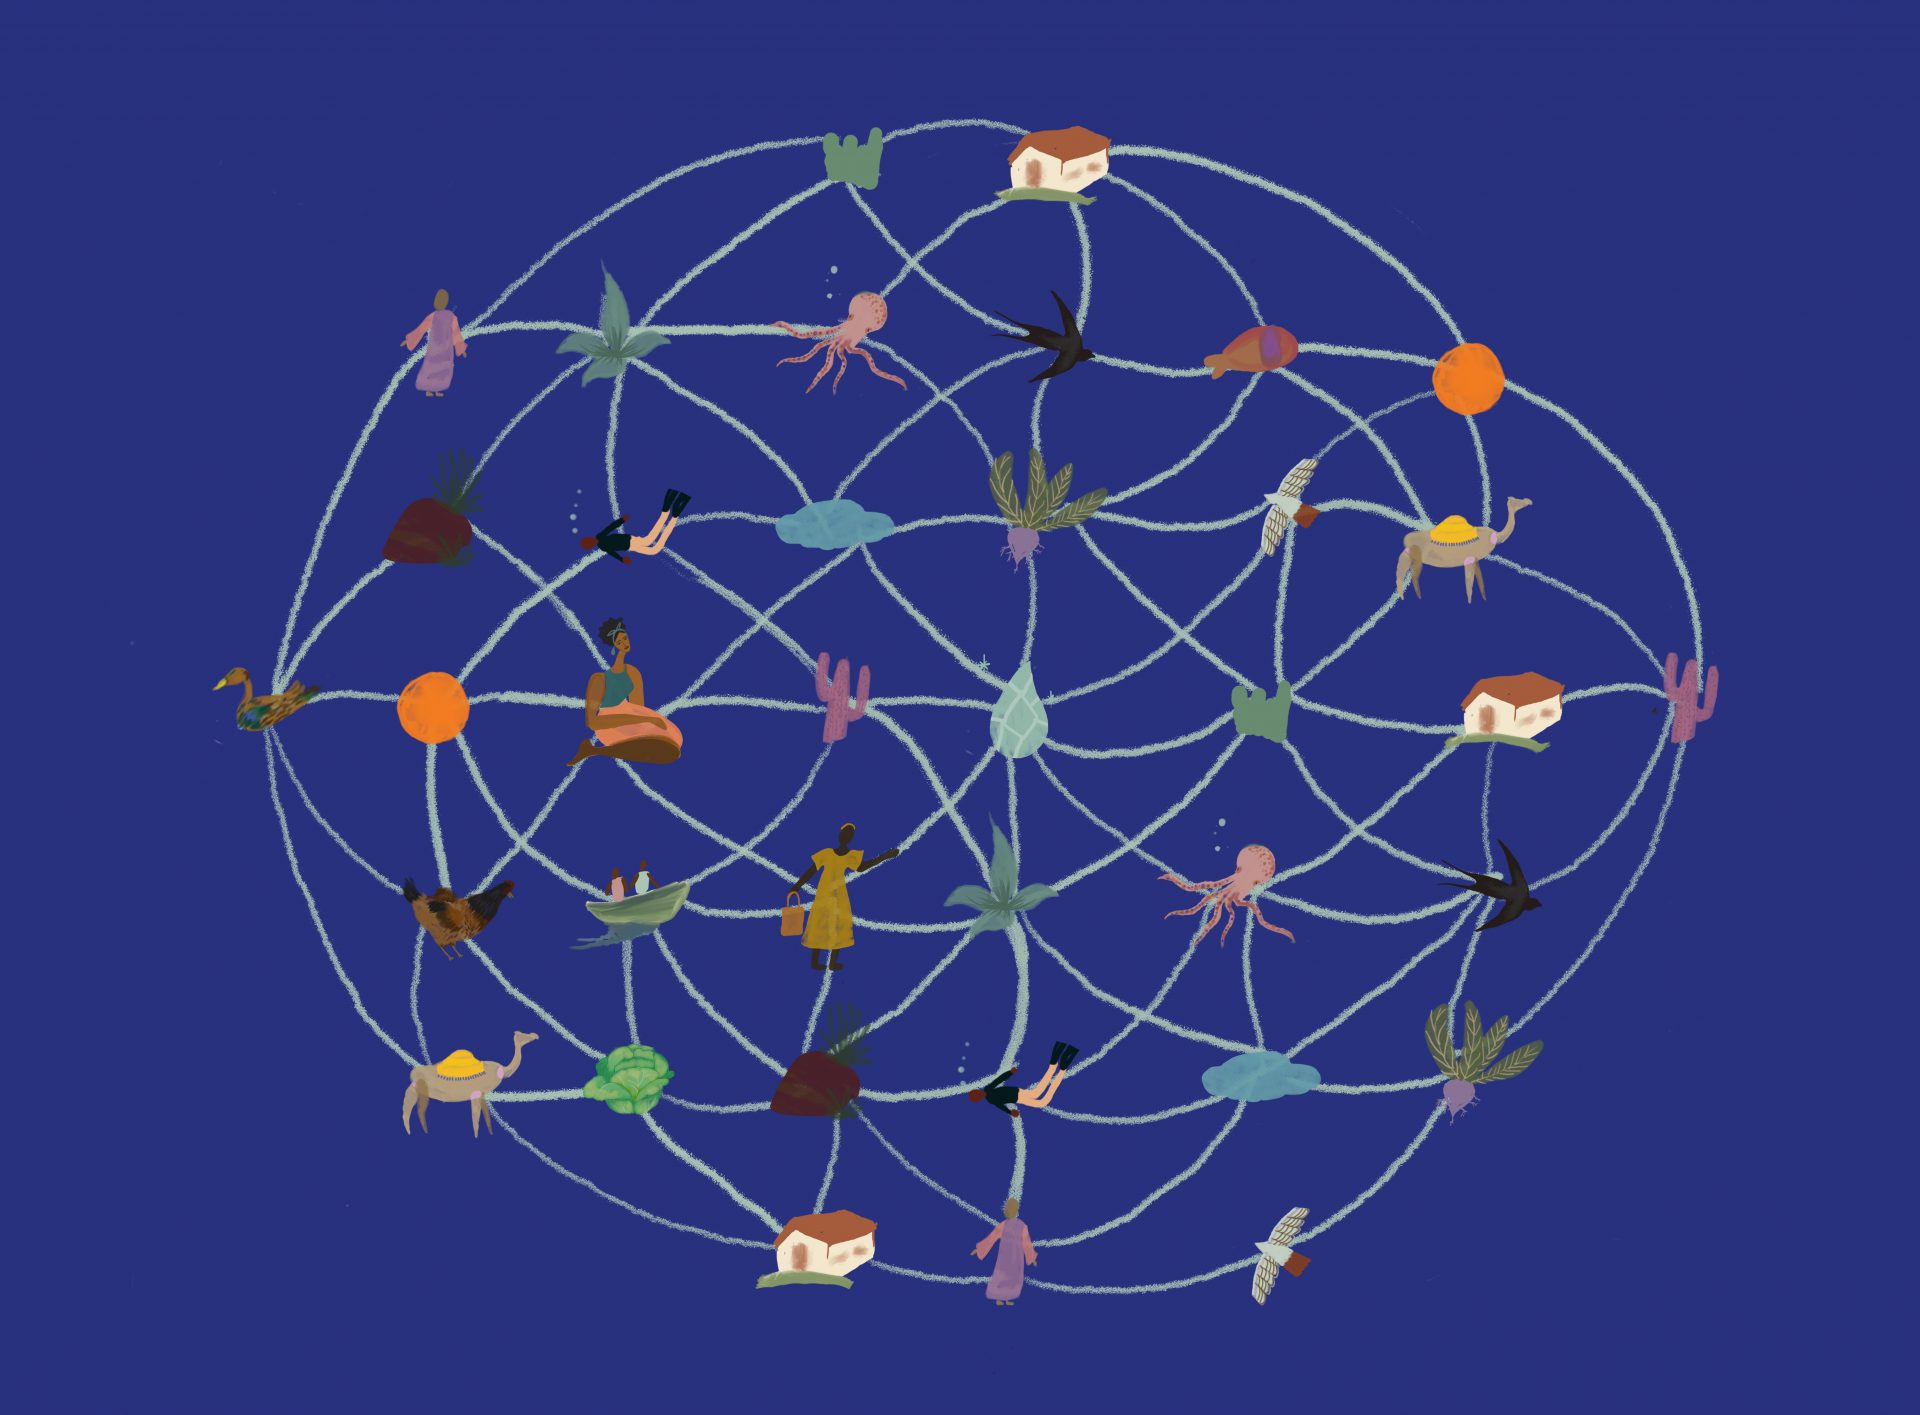 Illustration by Radhika Gupta showing elements connecting as a circular web, on dark blue background